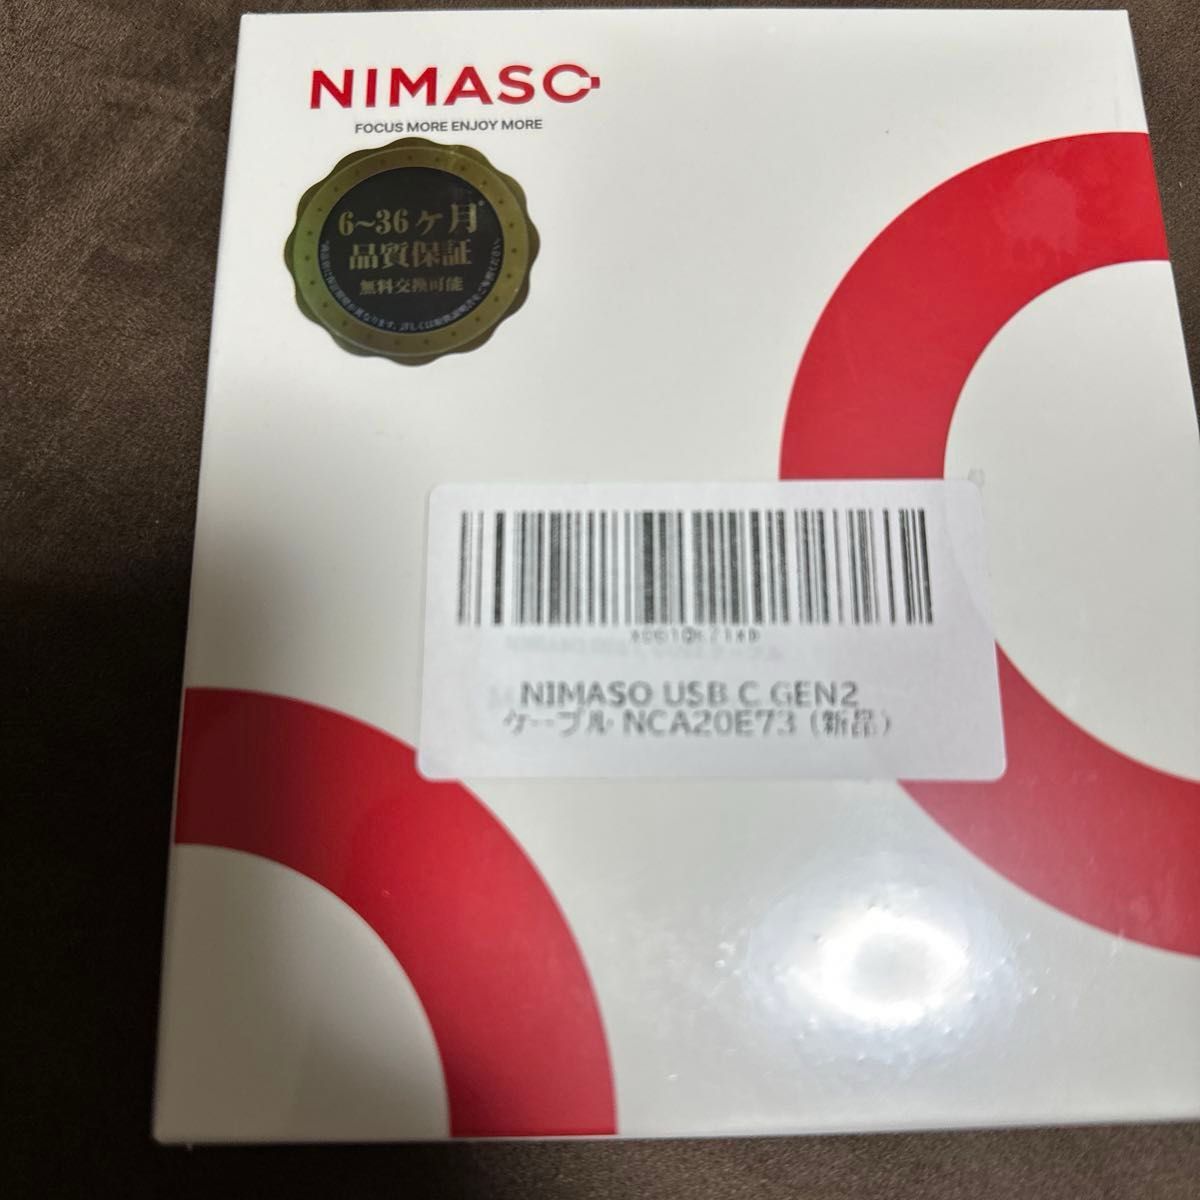 NIMASO USB C Type C ケーブル (Gen2)【100W/5A急速充電 USB3.1 PD対応 